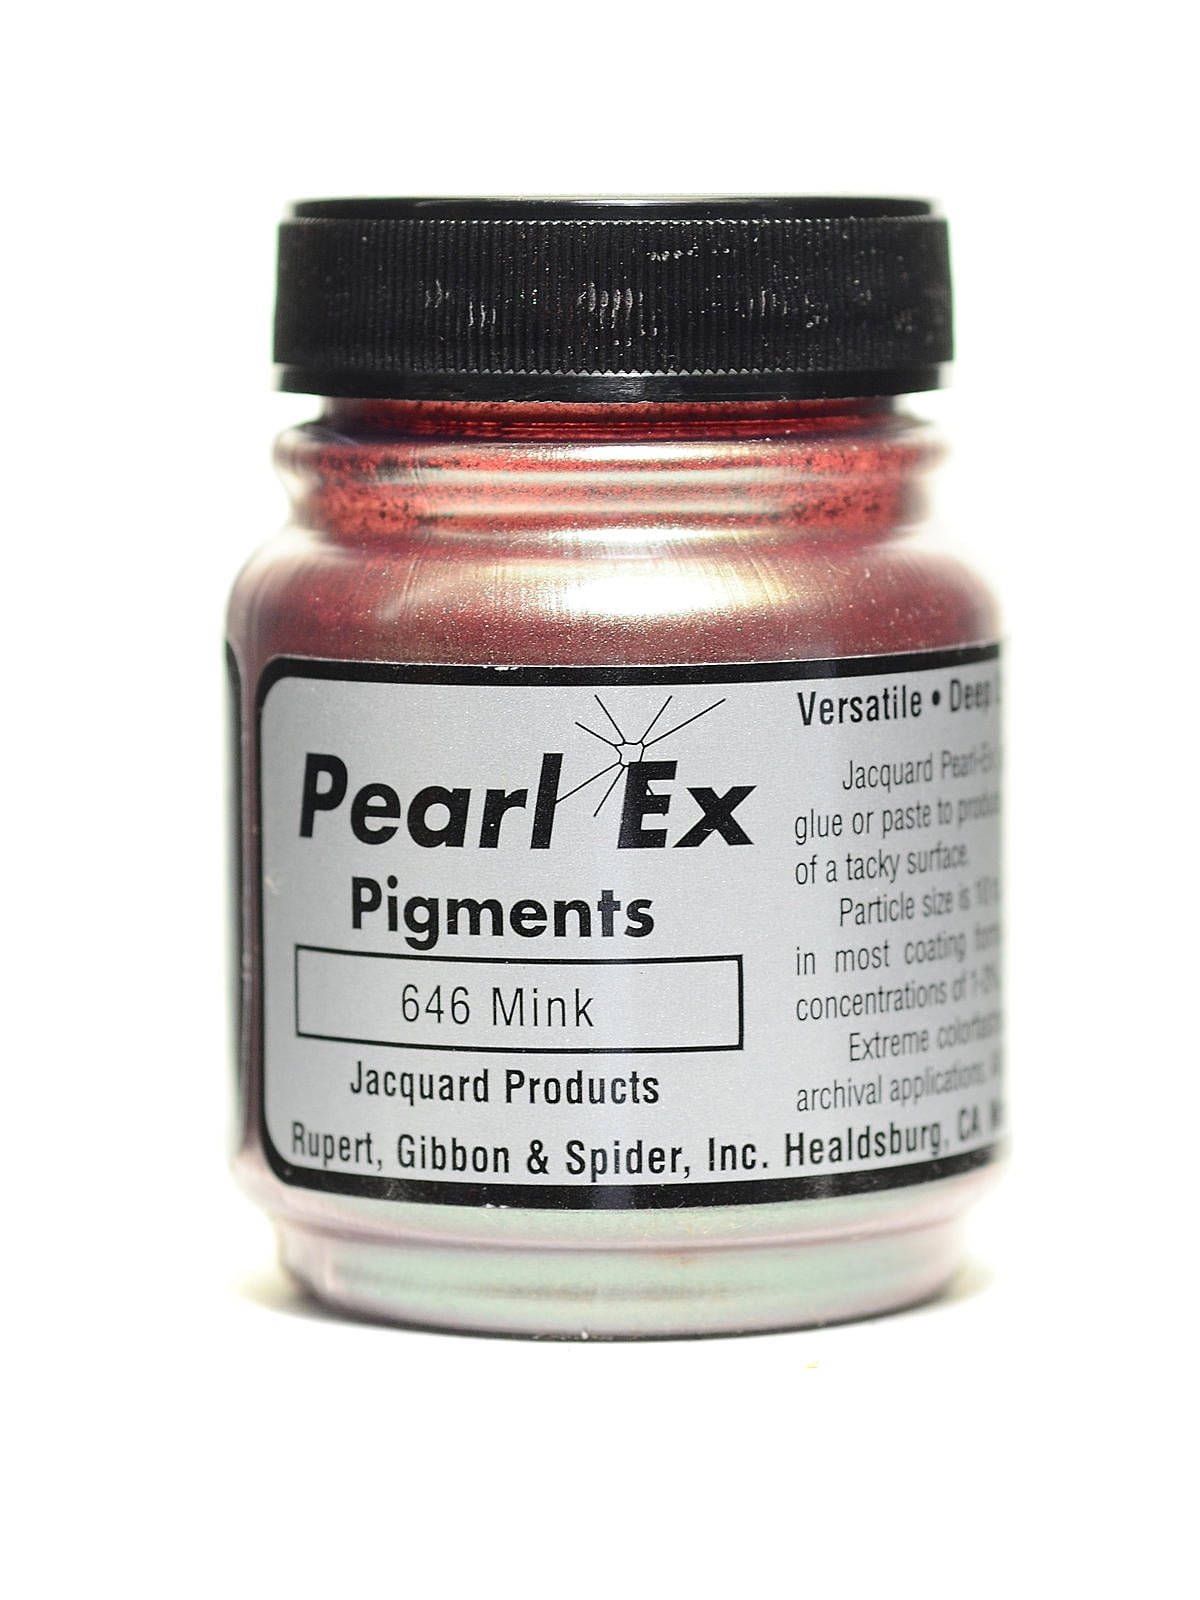 Jacquard Pearl Ex Powdered Pigment 0.75oz Super Copper